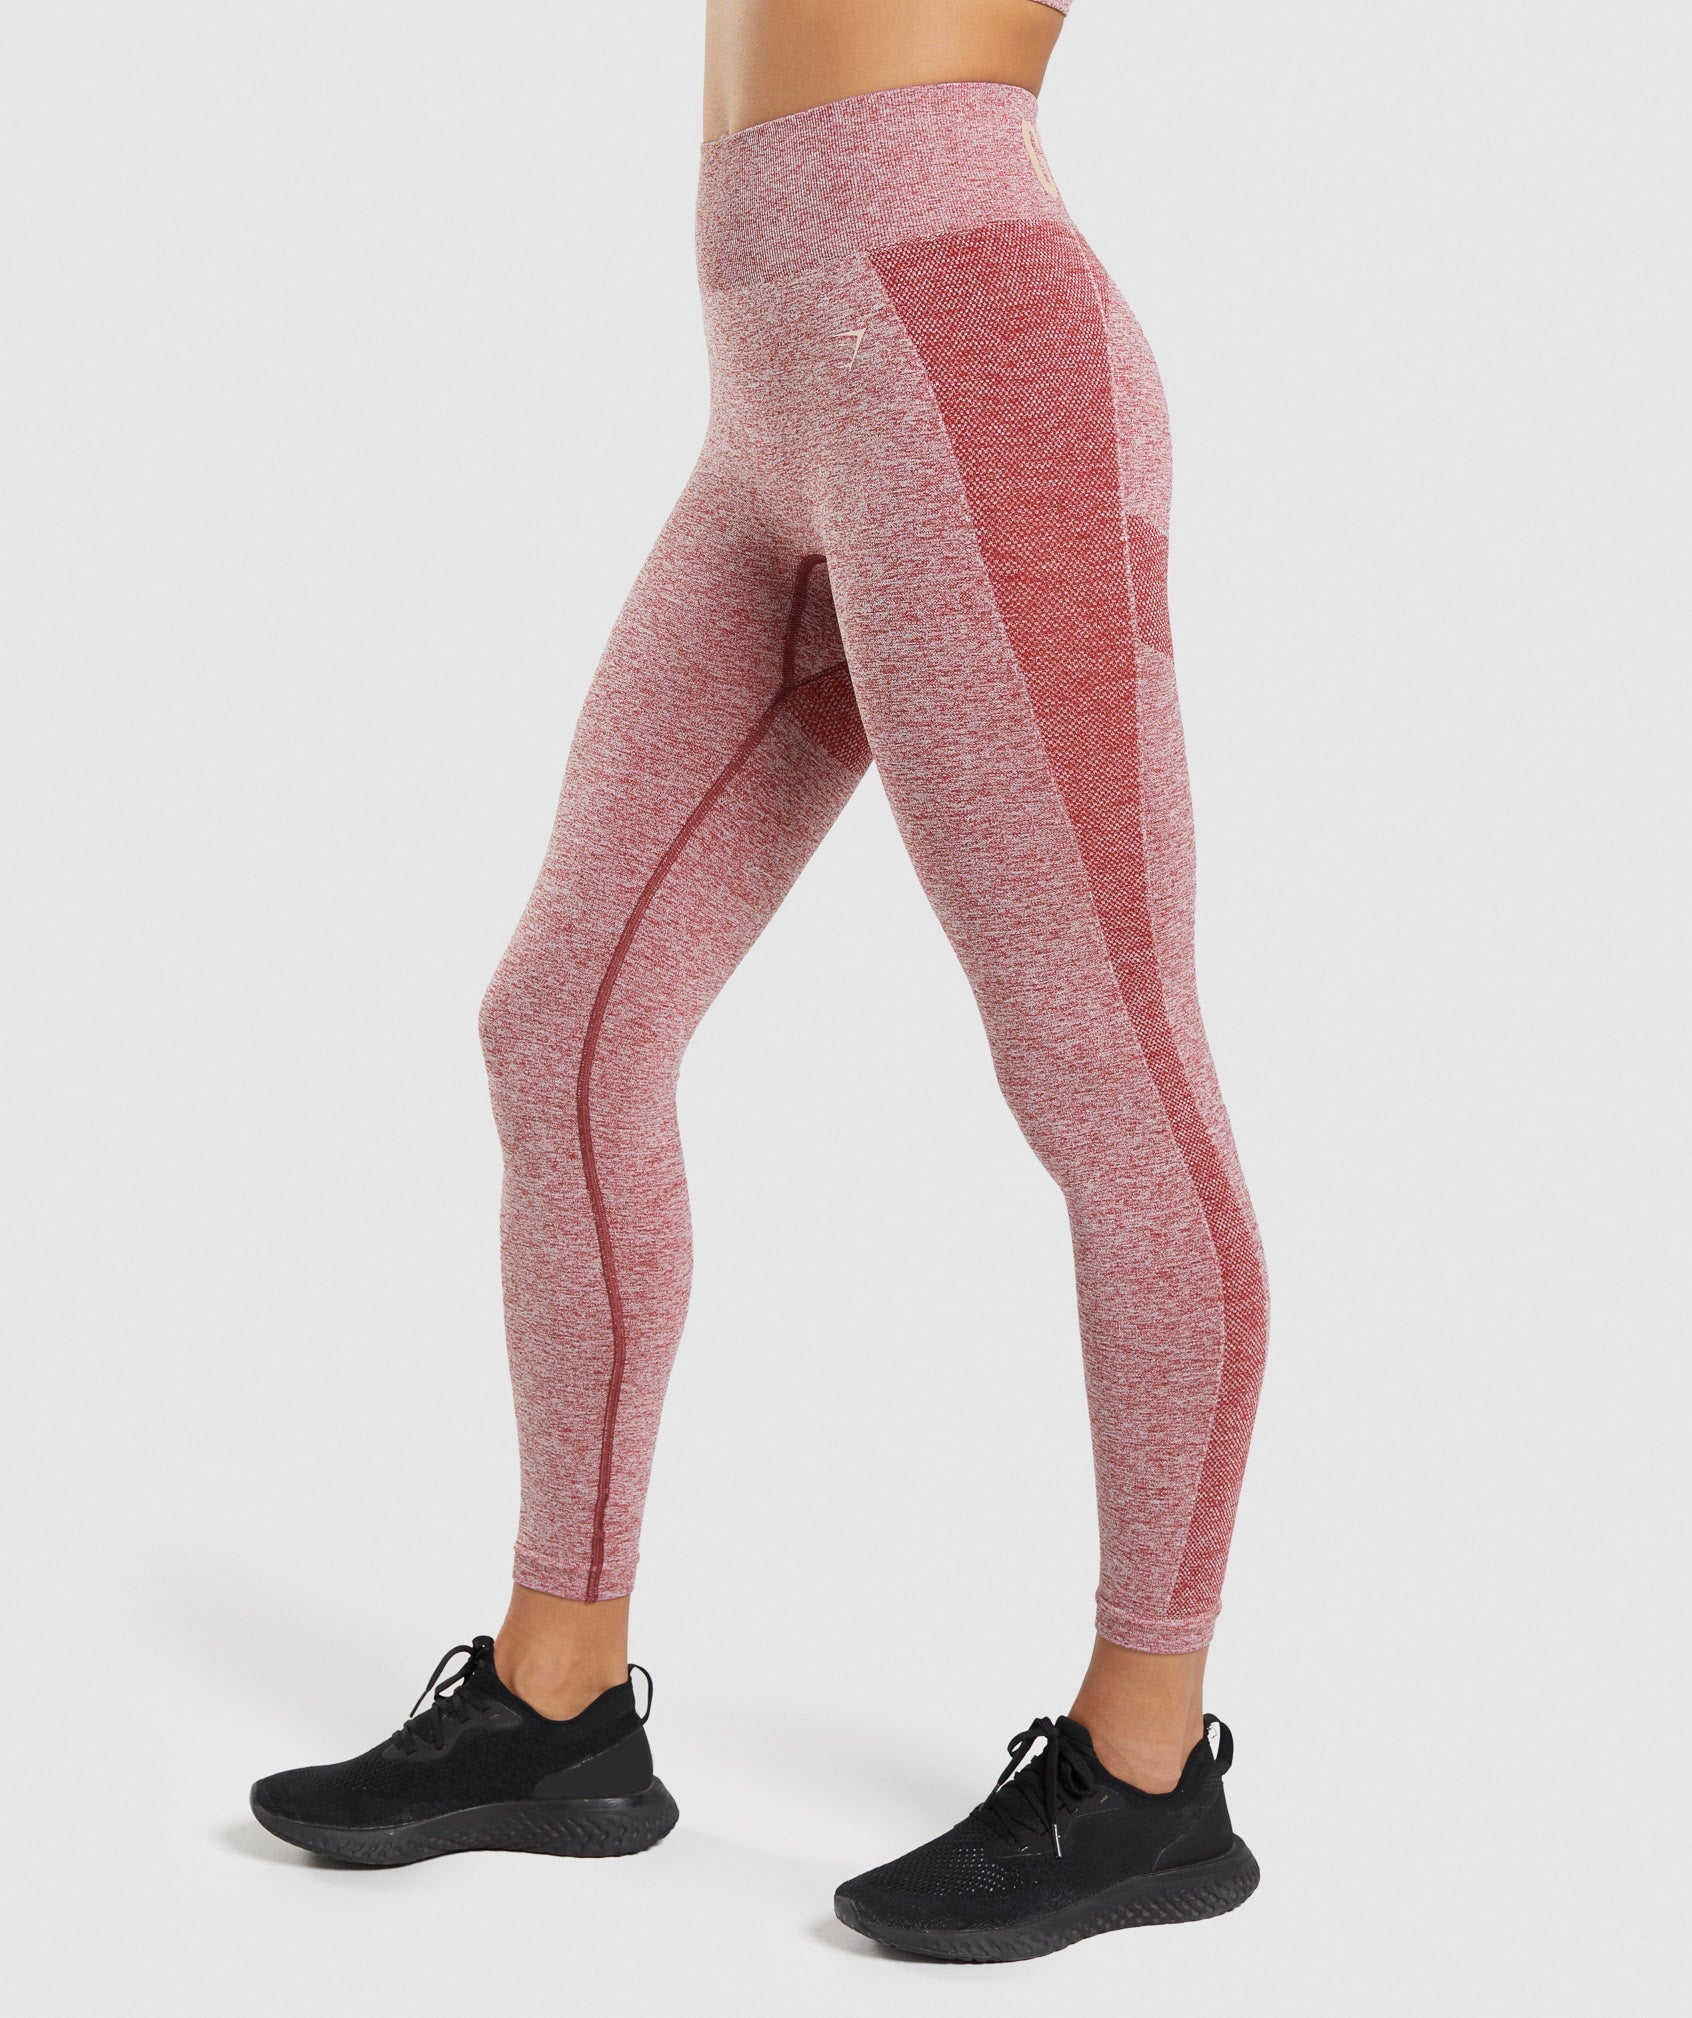 Women's Gymshark Sports tights, size 42 (Burgundy)